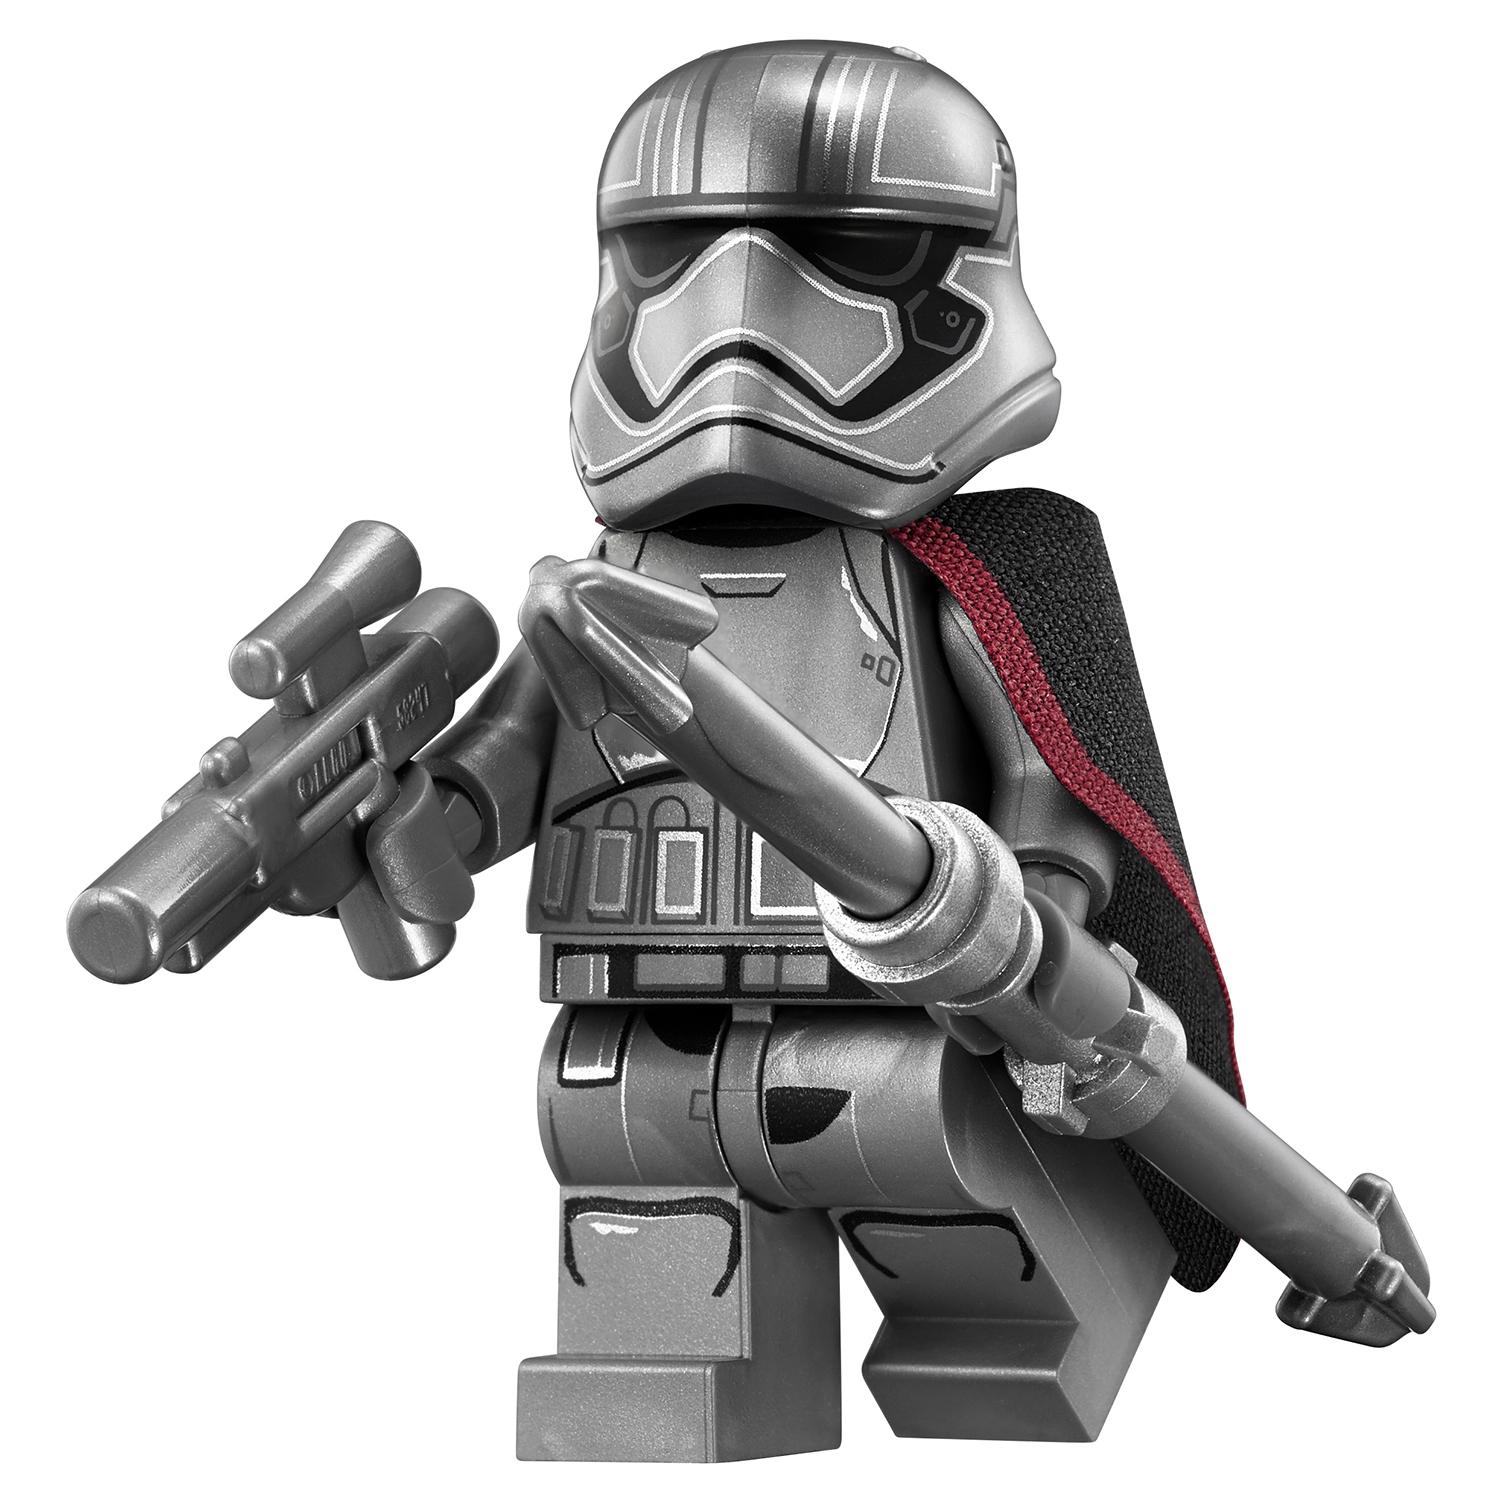 Lego Star Wars 75201 Вездеход AT-ST Первого Ордена